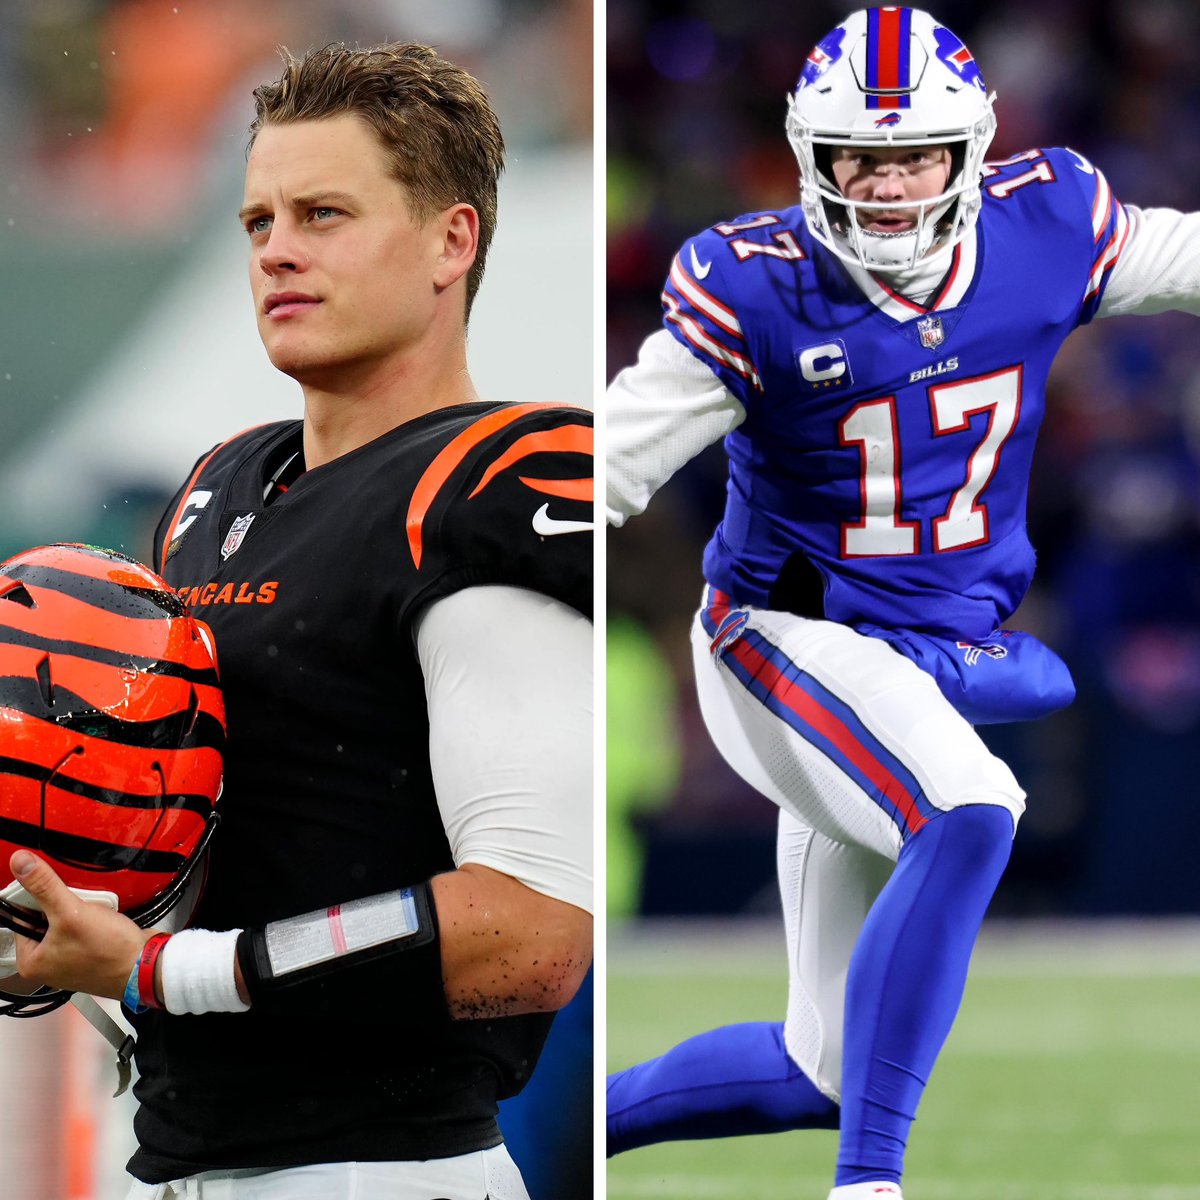 RT @JoeCoolStan: Who is the better Quarterback? 

RT- Josh Allen
Like- Joe Burrow

#Bengals #Bills #NFL https://t.co/1p9SKYpdM7